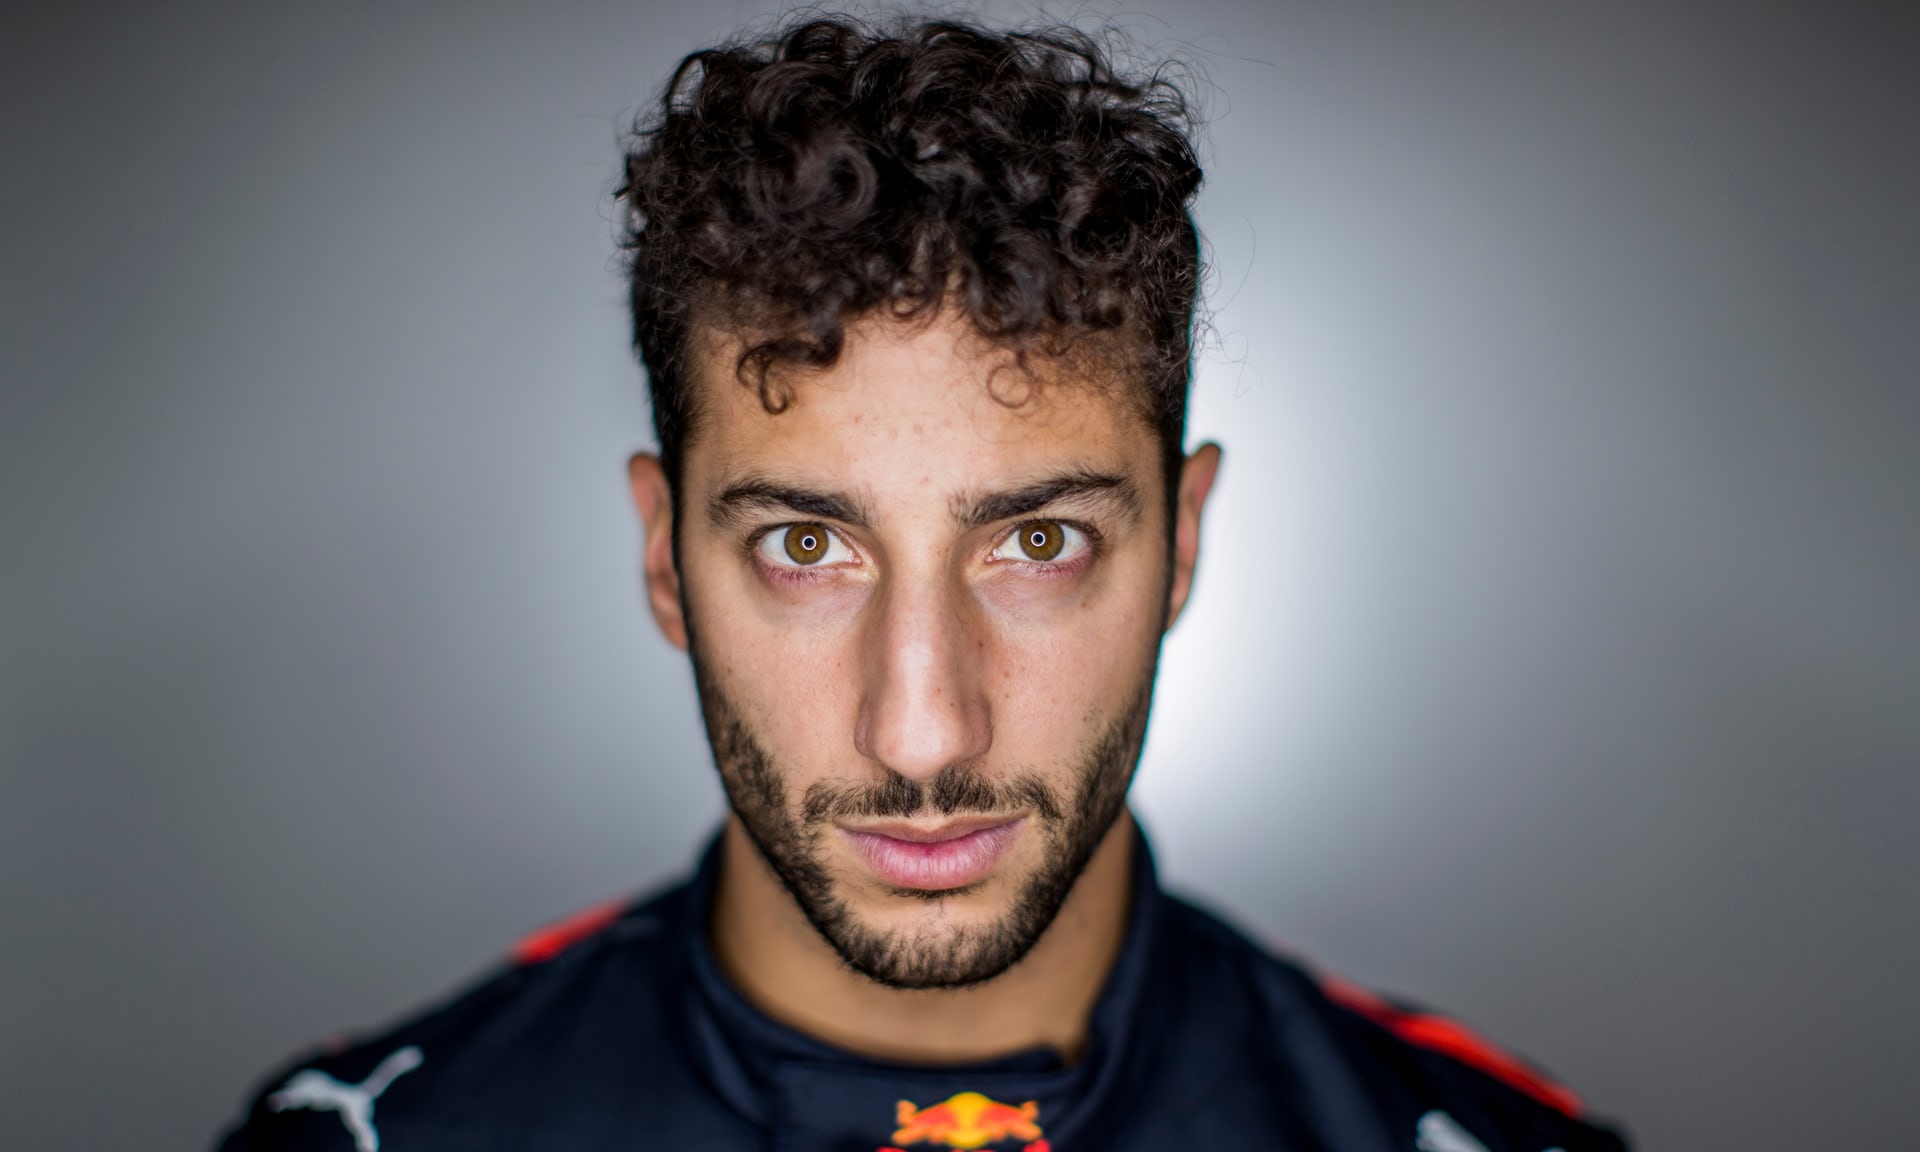 Daniel Ricciardo leaving Red Bull to join Renault in 2019 - Marking The